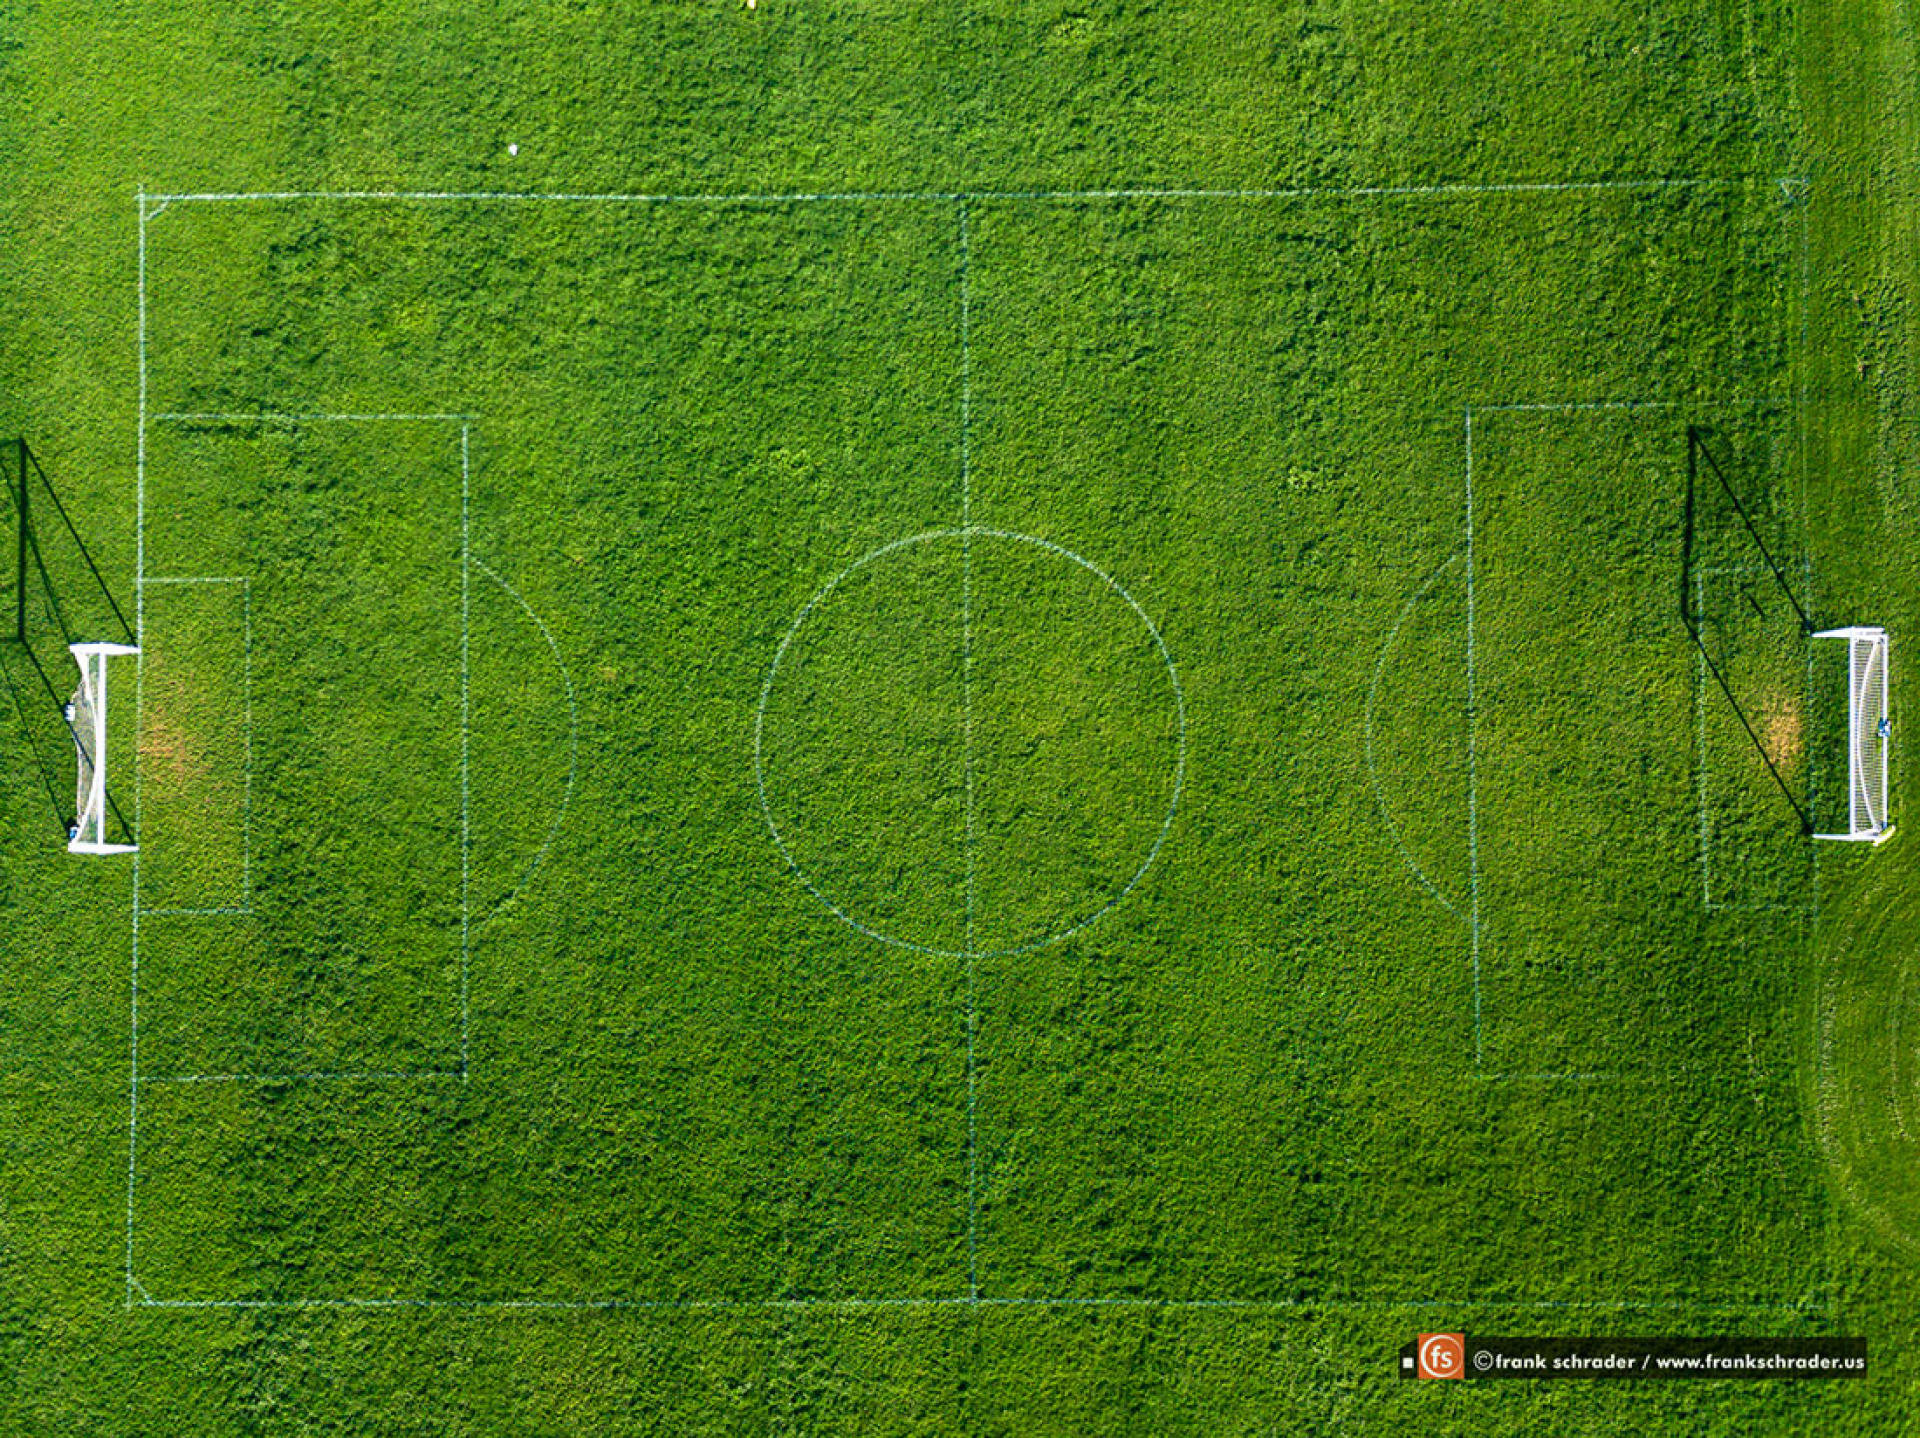 soccerfield图片